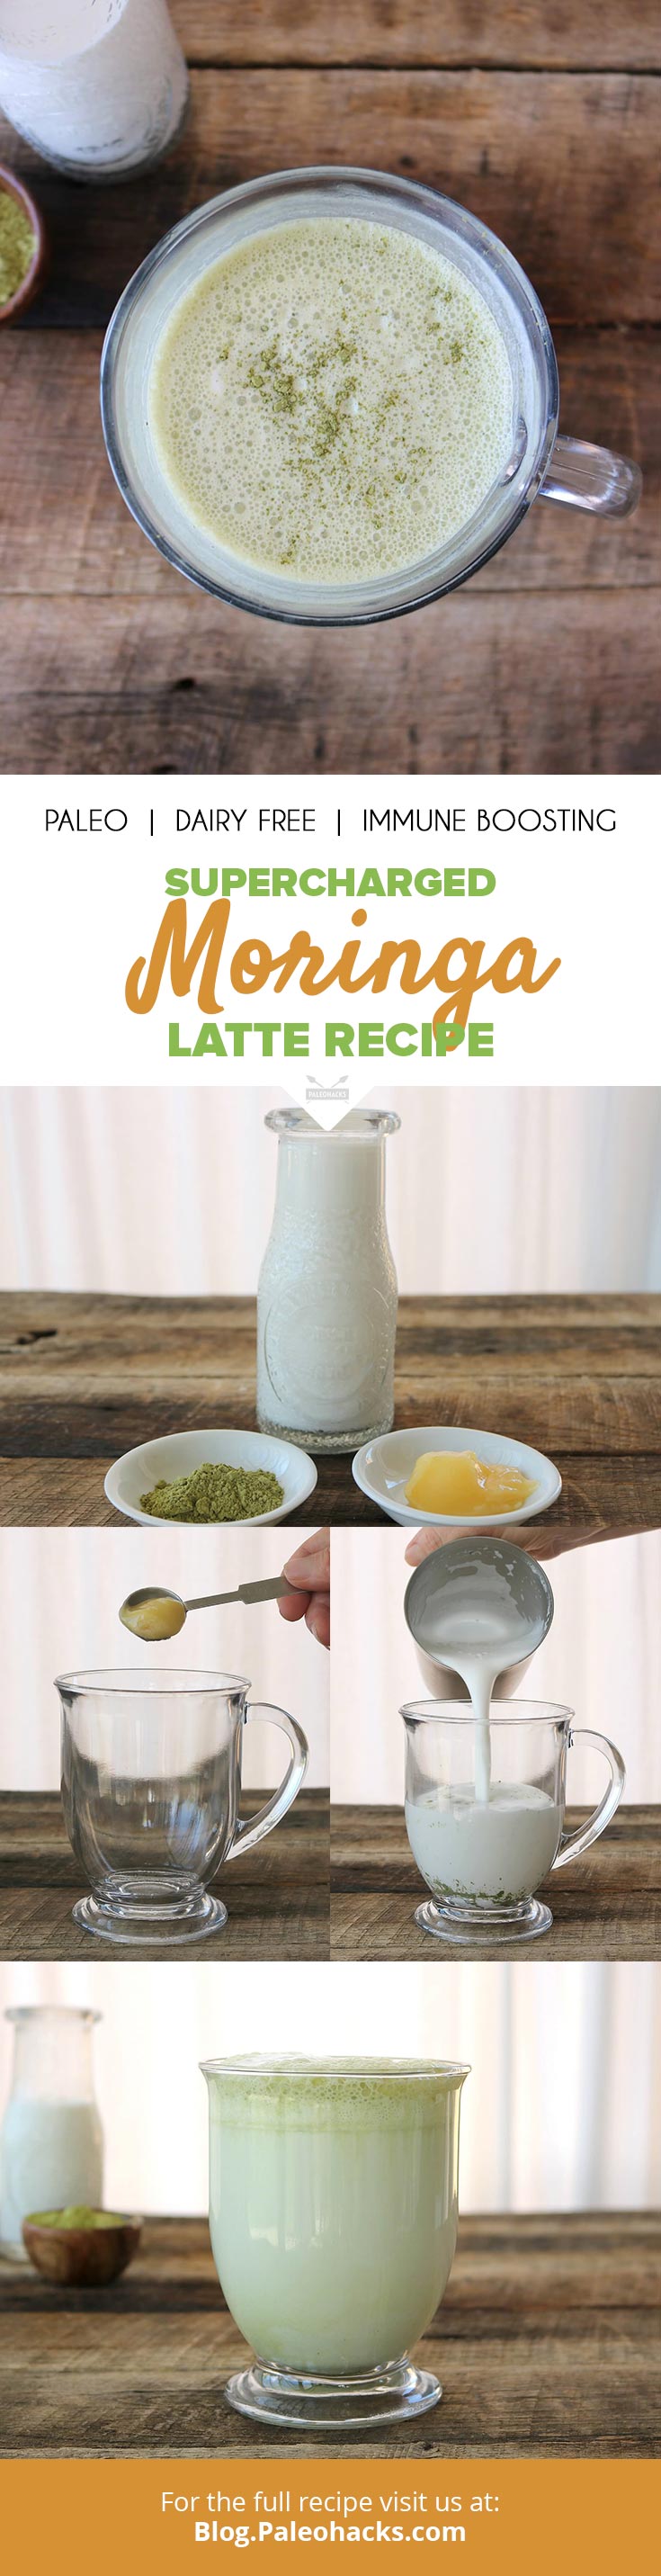 How to make a latte with moringa